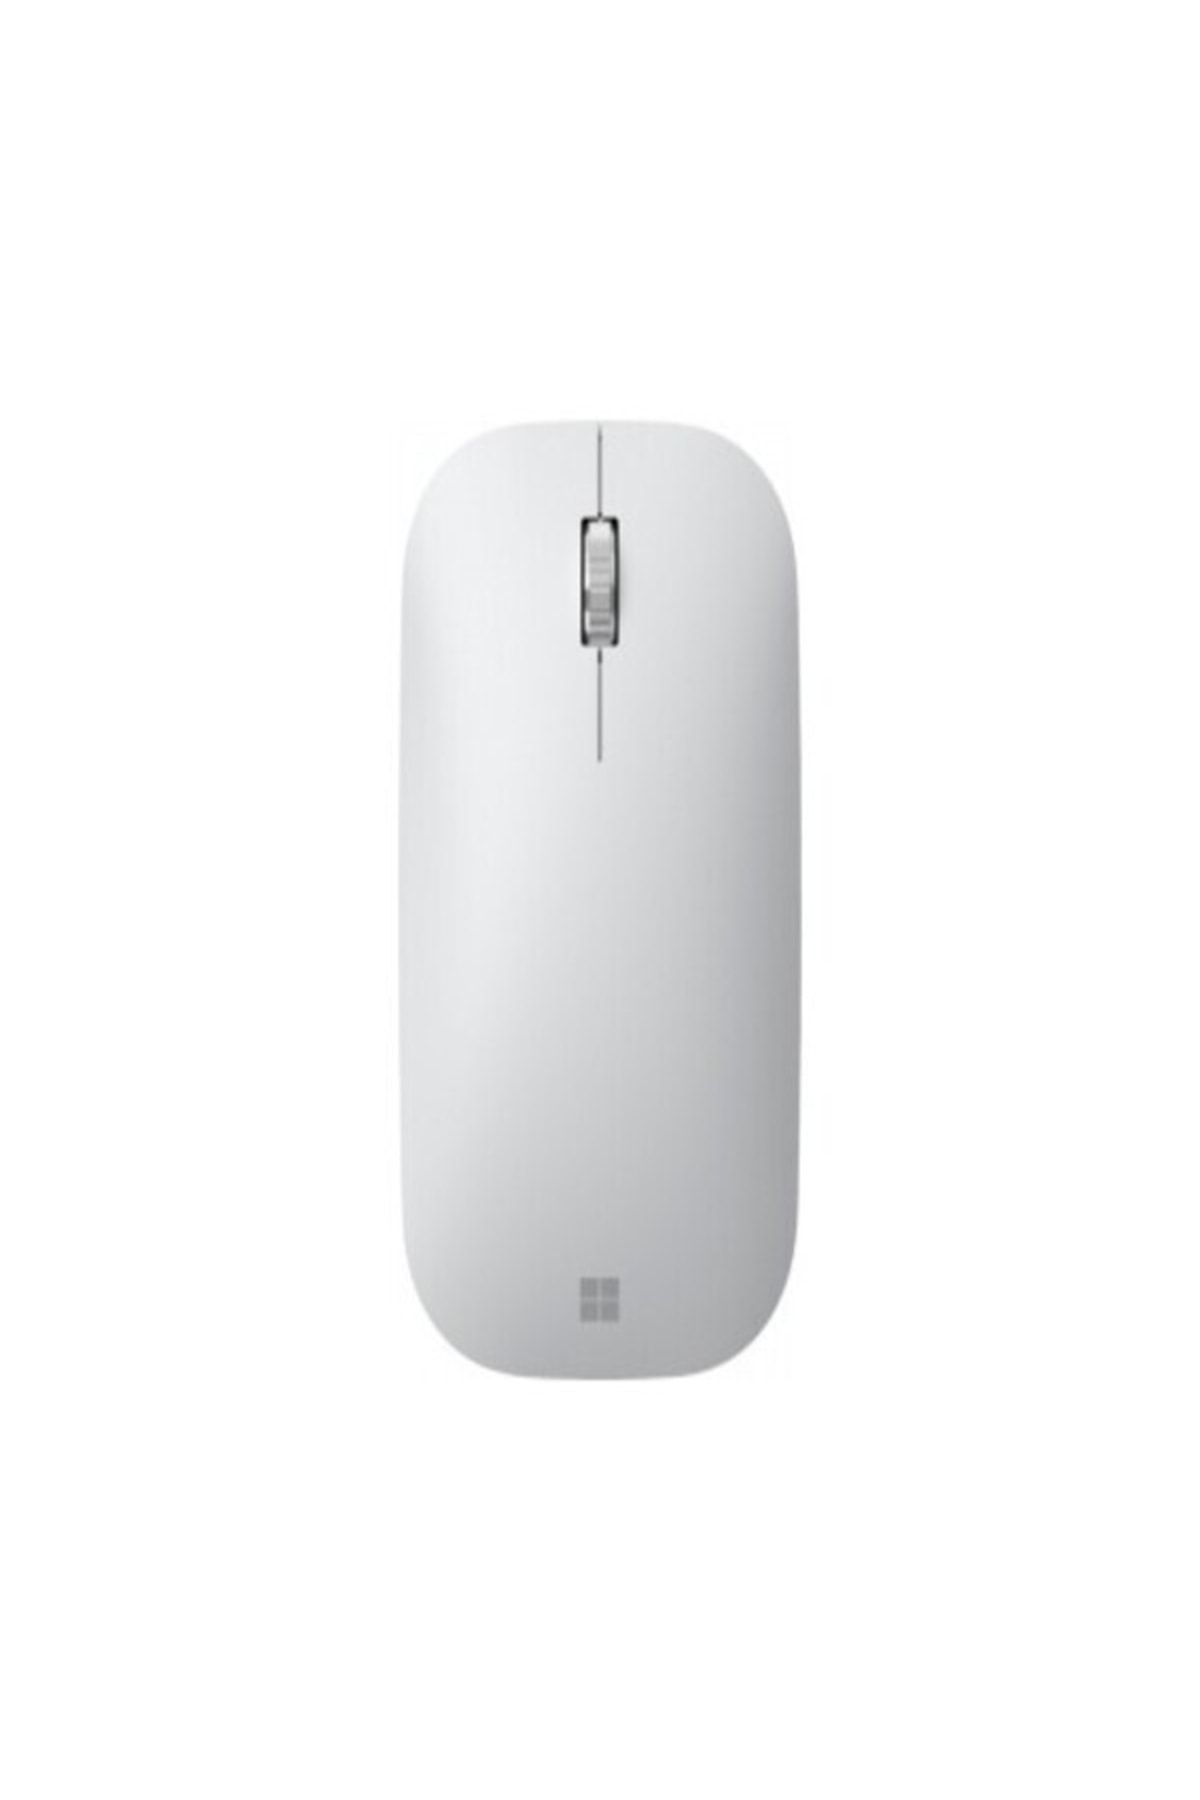 Microsoft Modern Mobile Kablosuz Bluetooth Mouse Ktf-00066